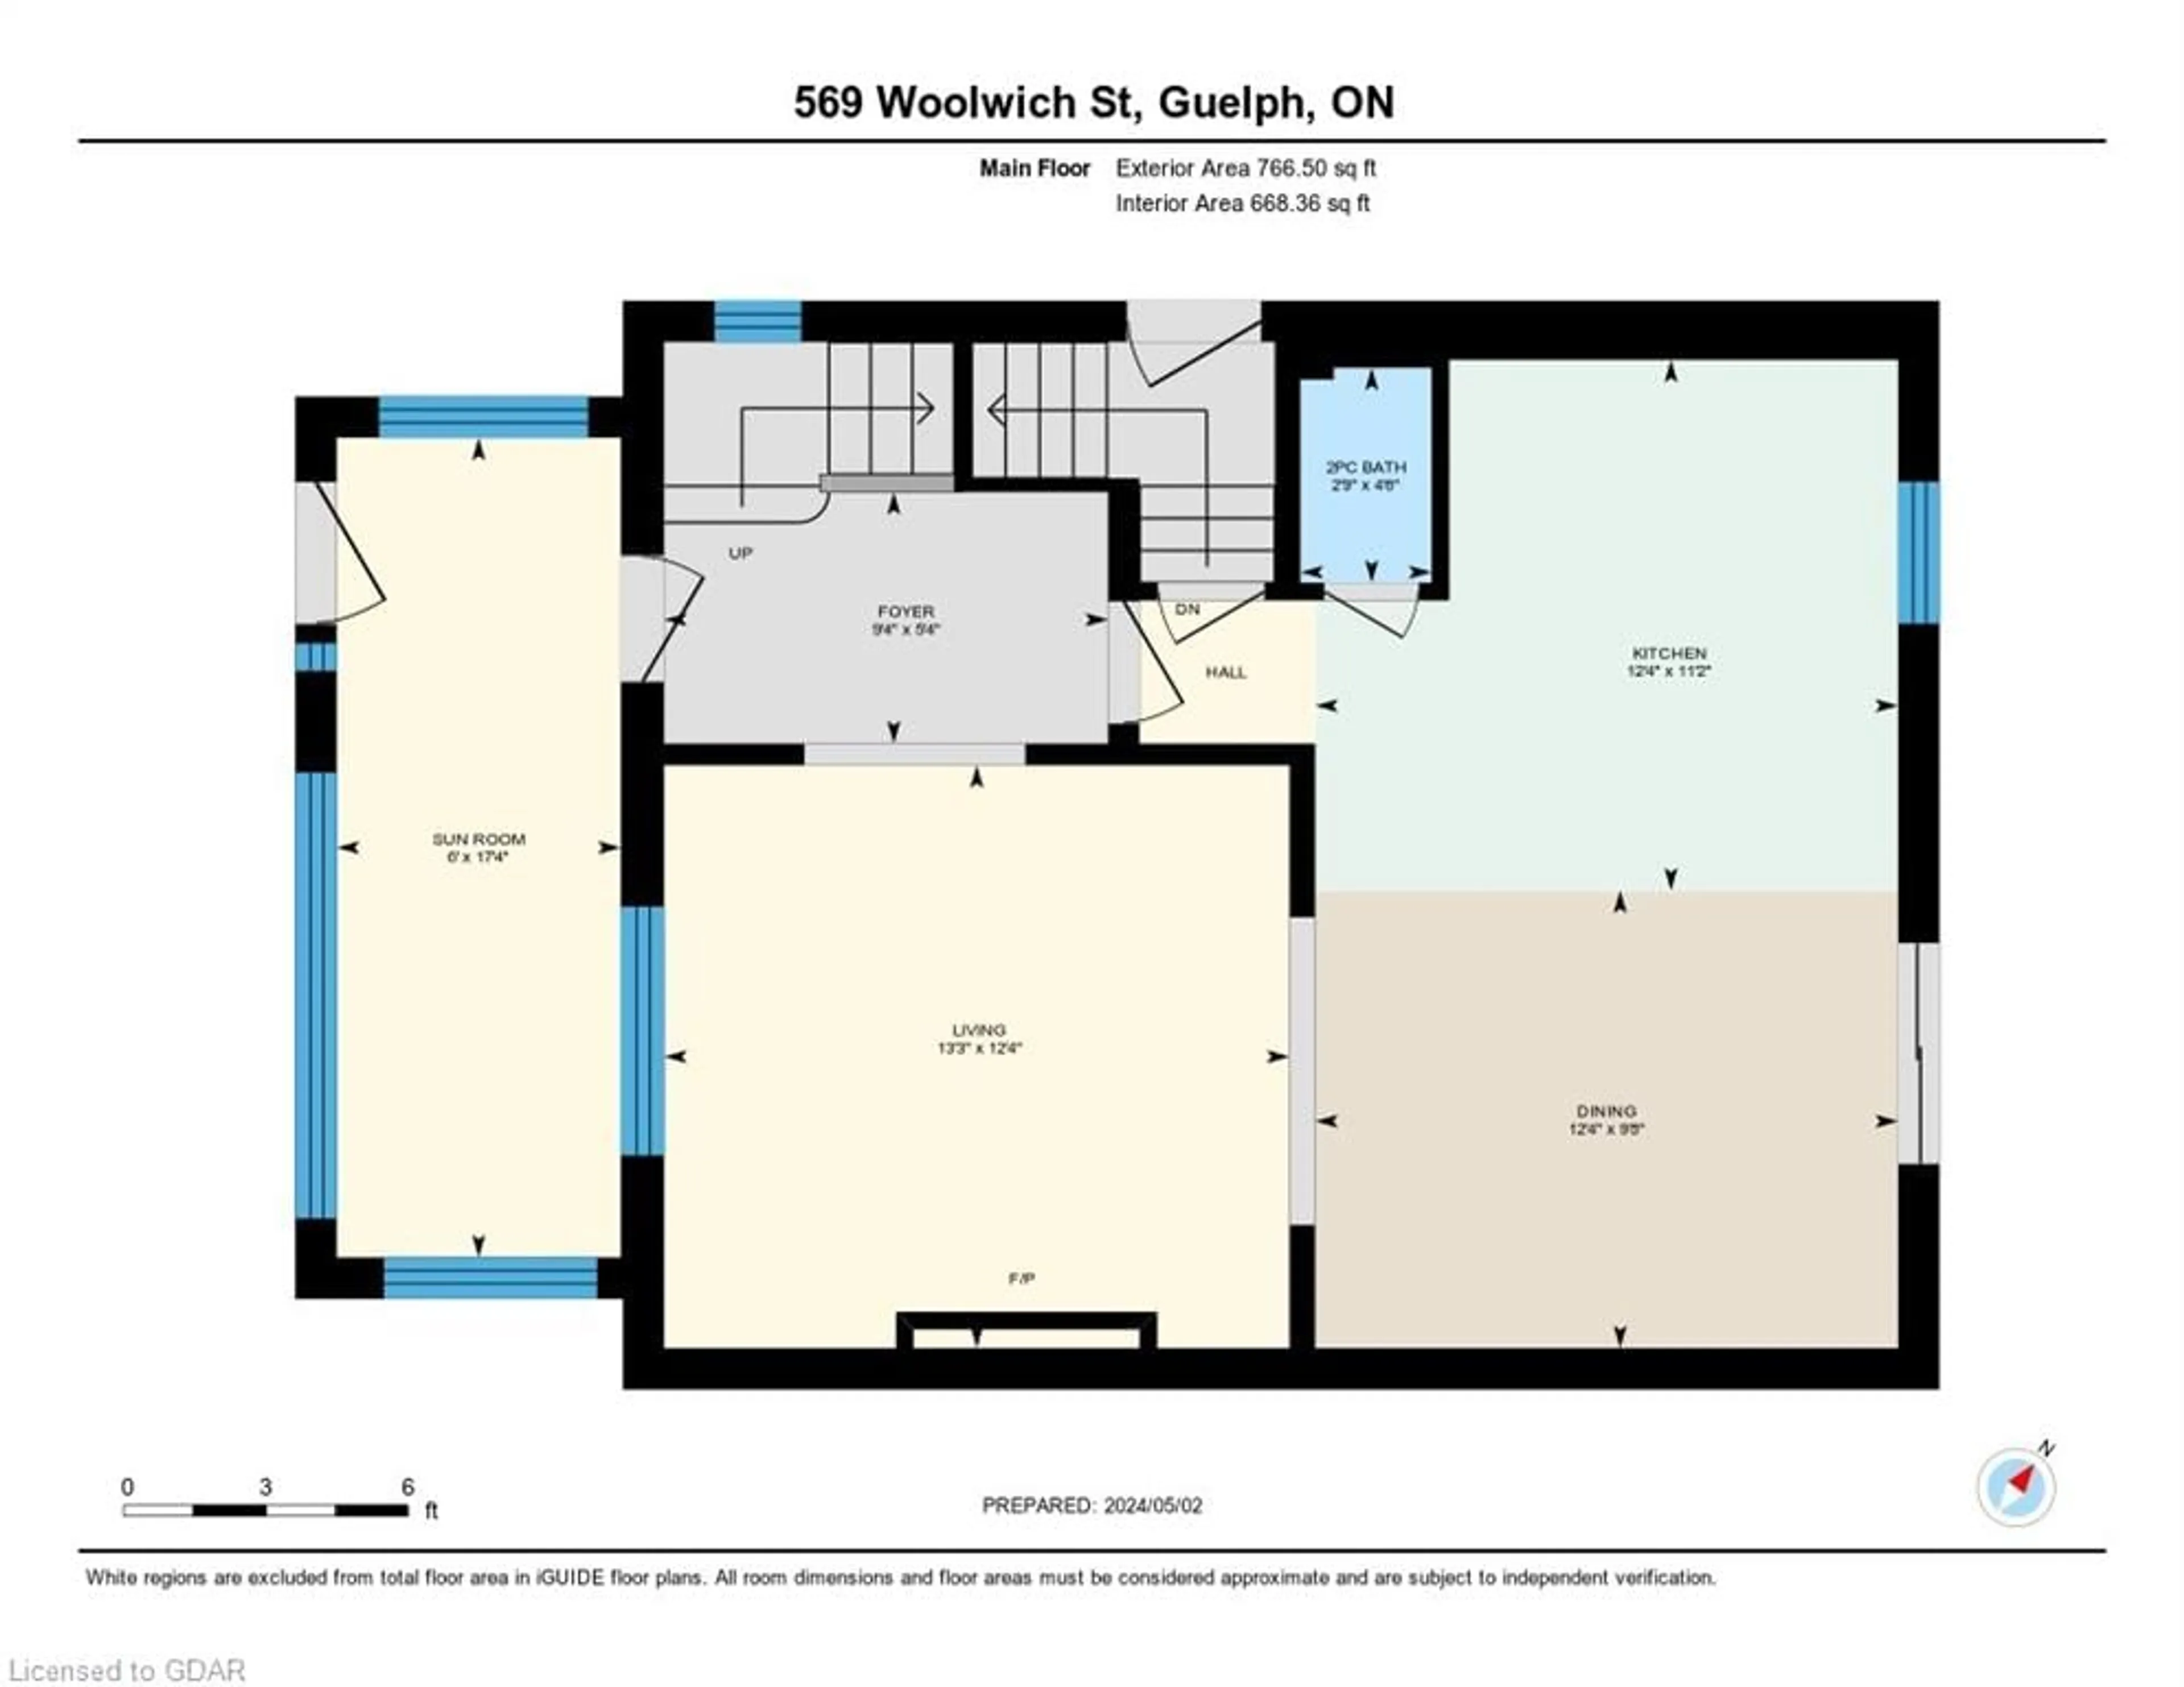 Floor plan for 569 Woolwich St, Guelph Ontario N1H 3Y4